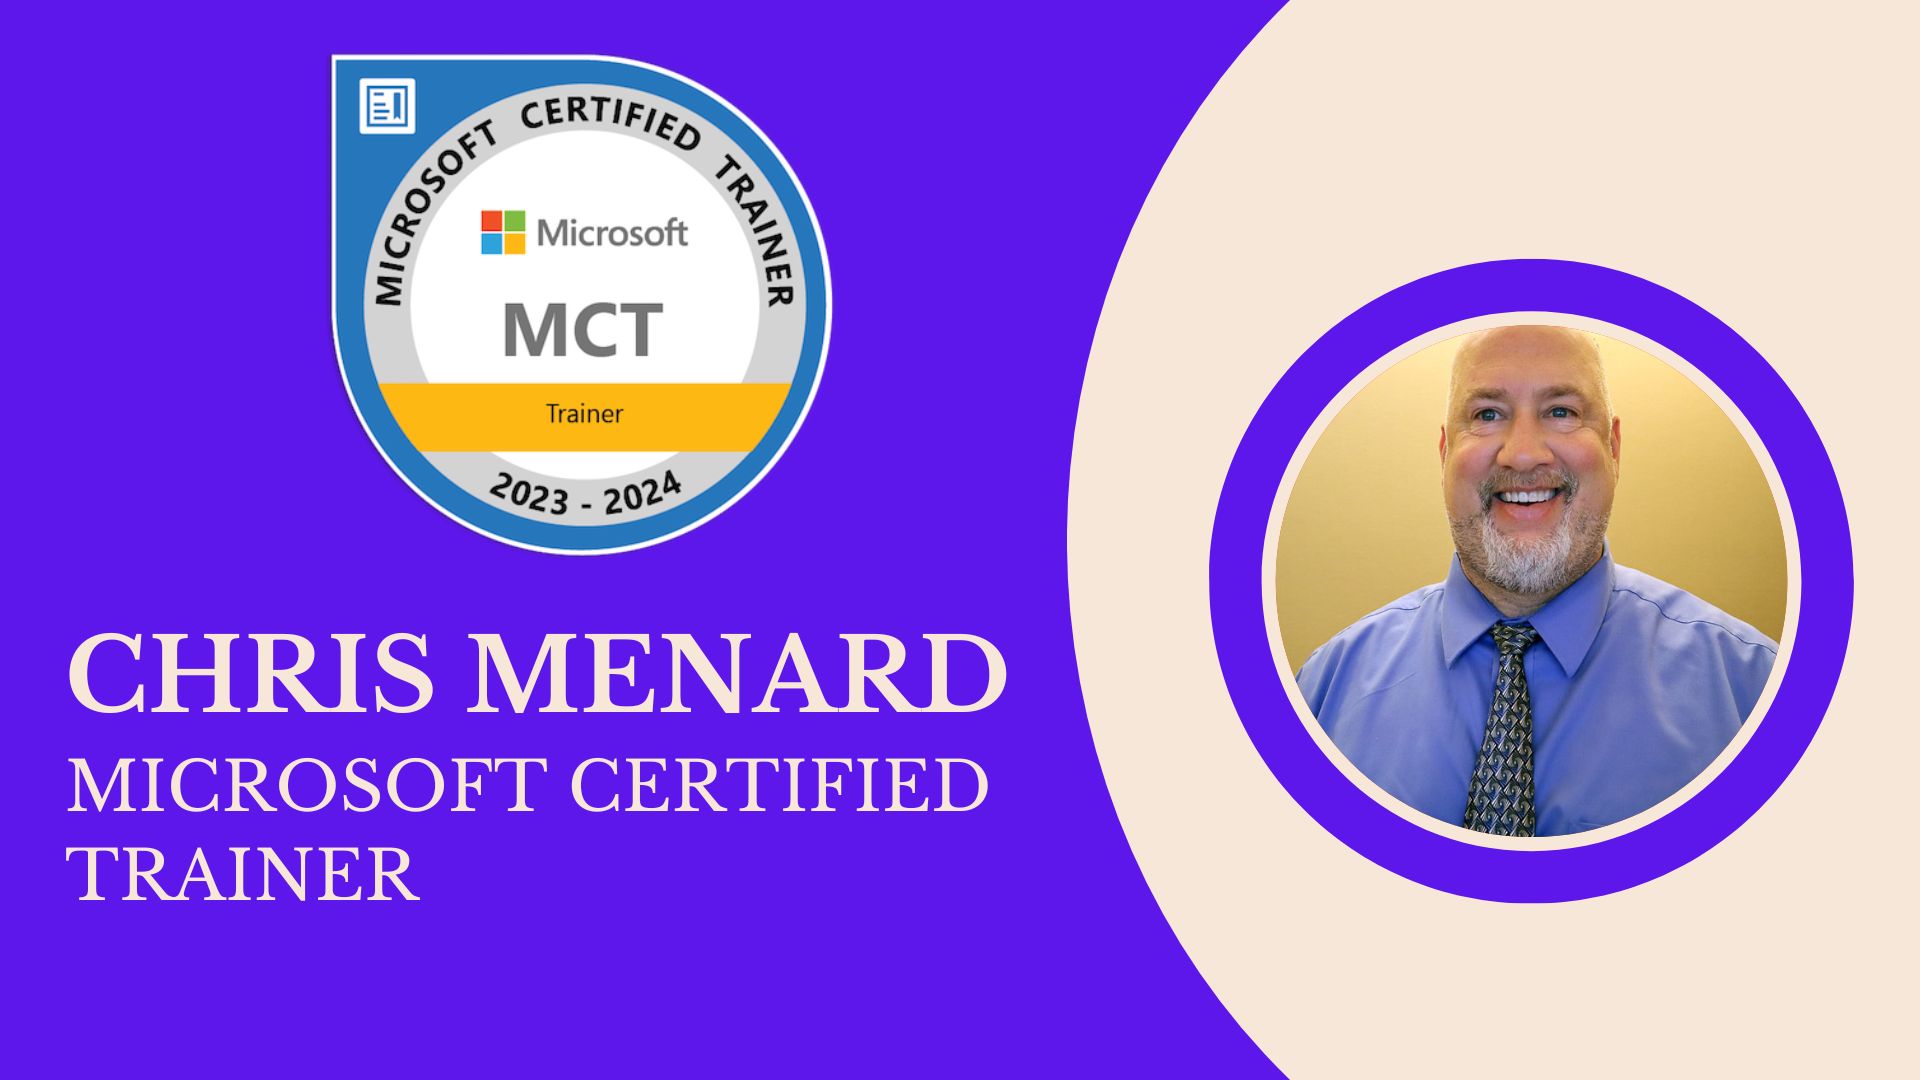 Chris Menard renews Microsoft Certified Trainer certification